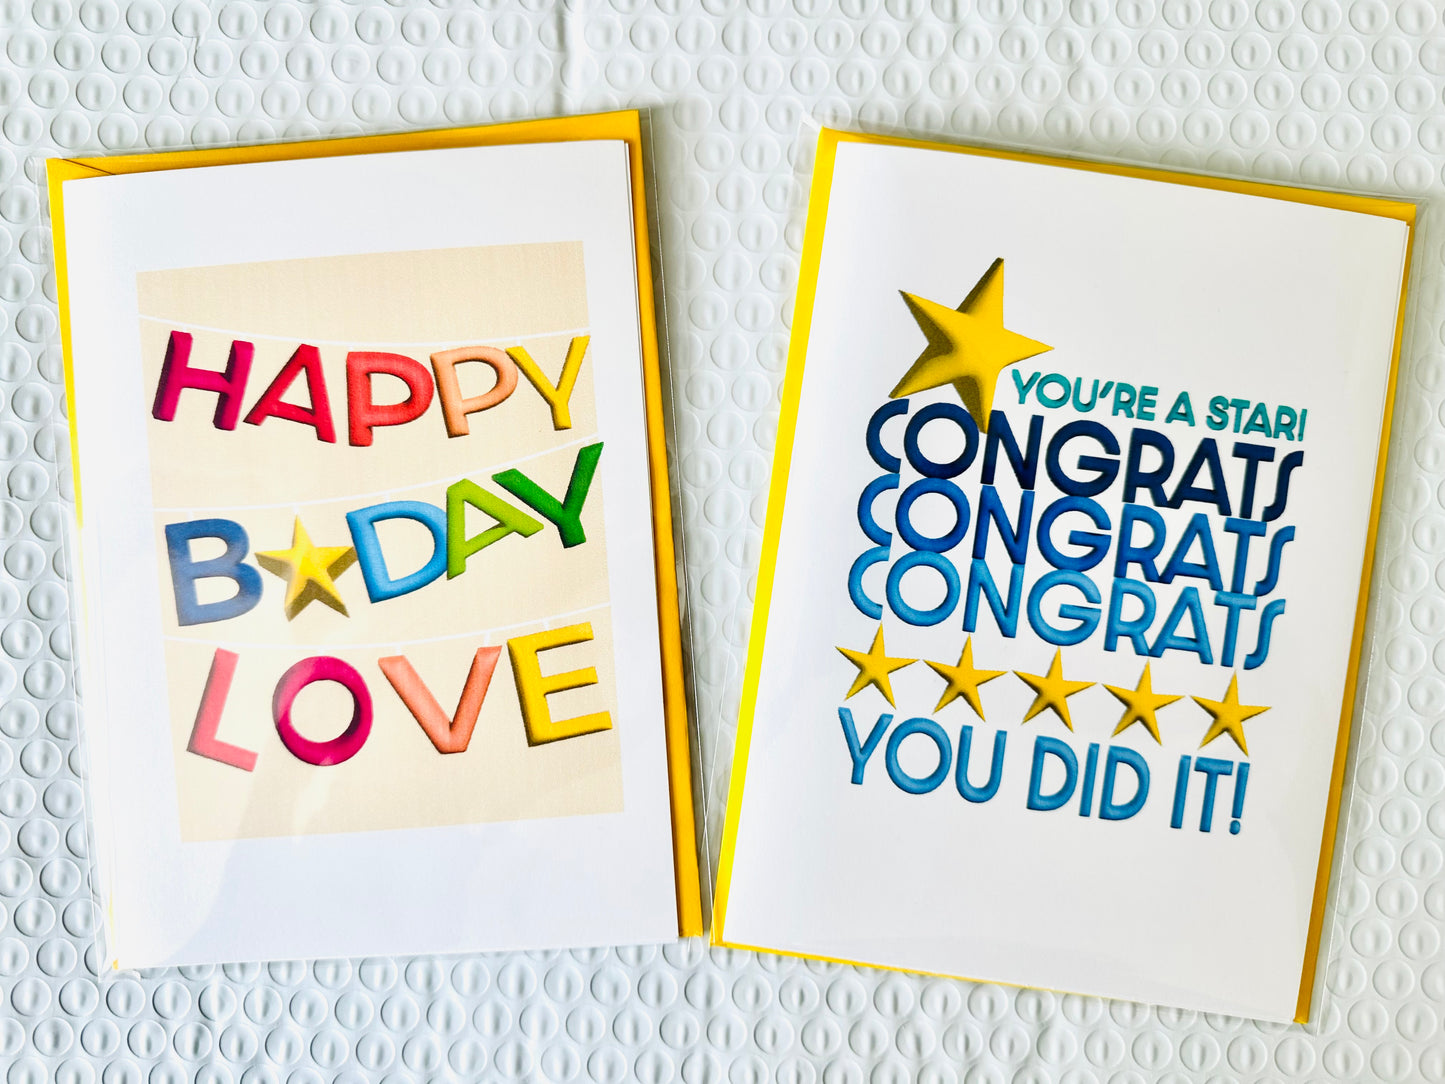 Happy Birthday Love 5x7 Birthday Balloon lettering & star greeting card